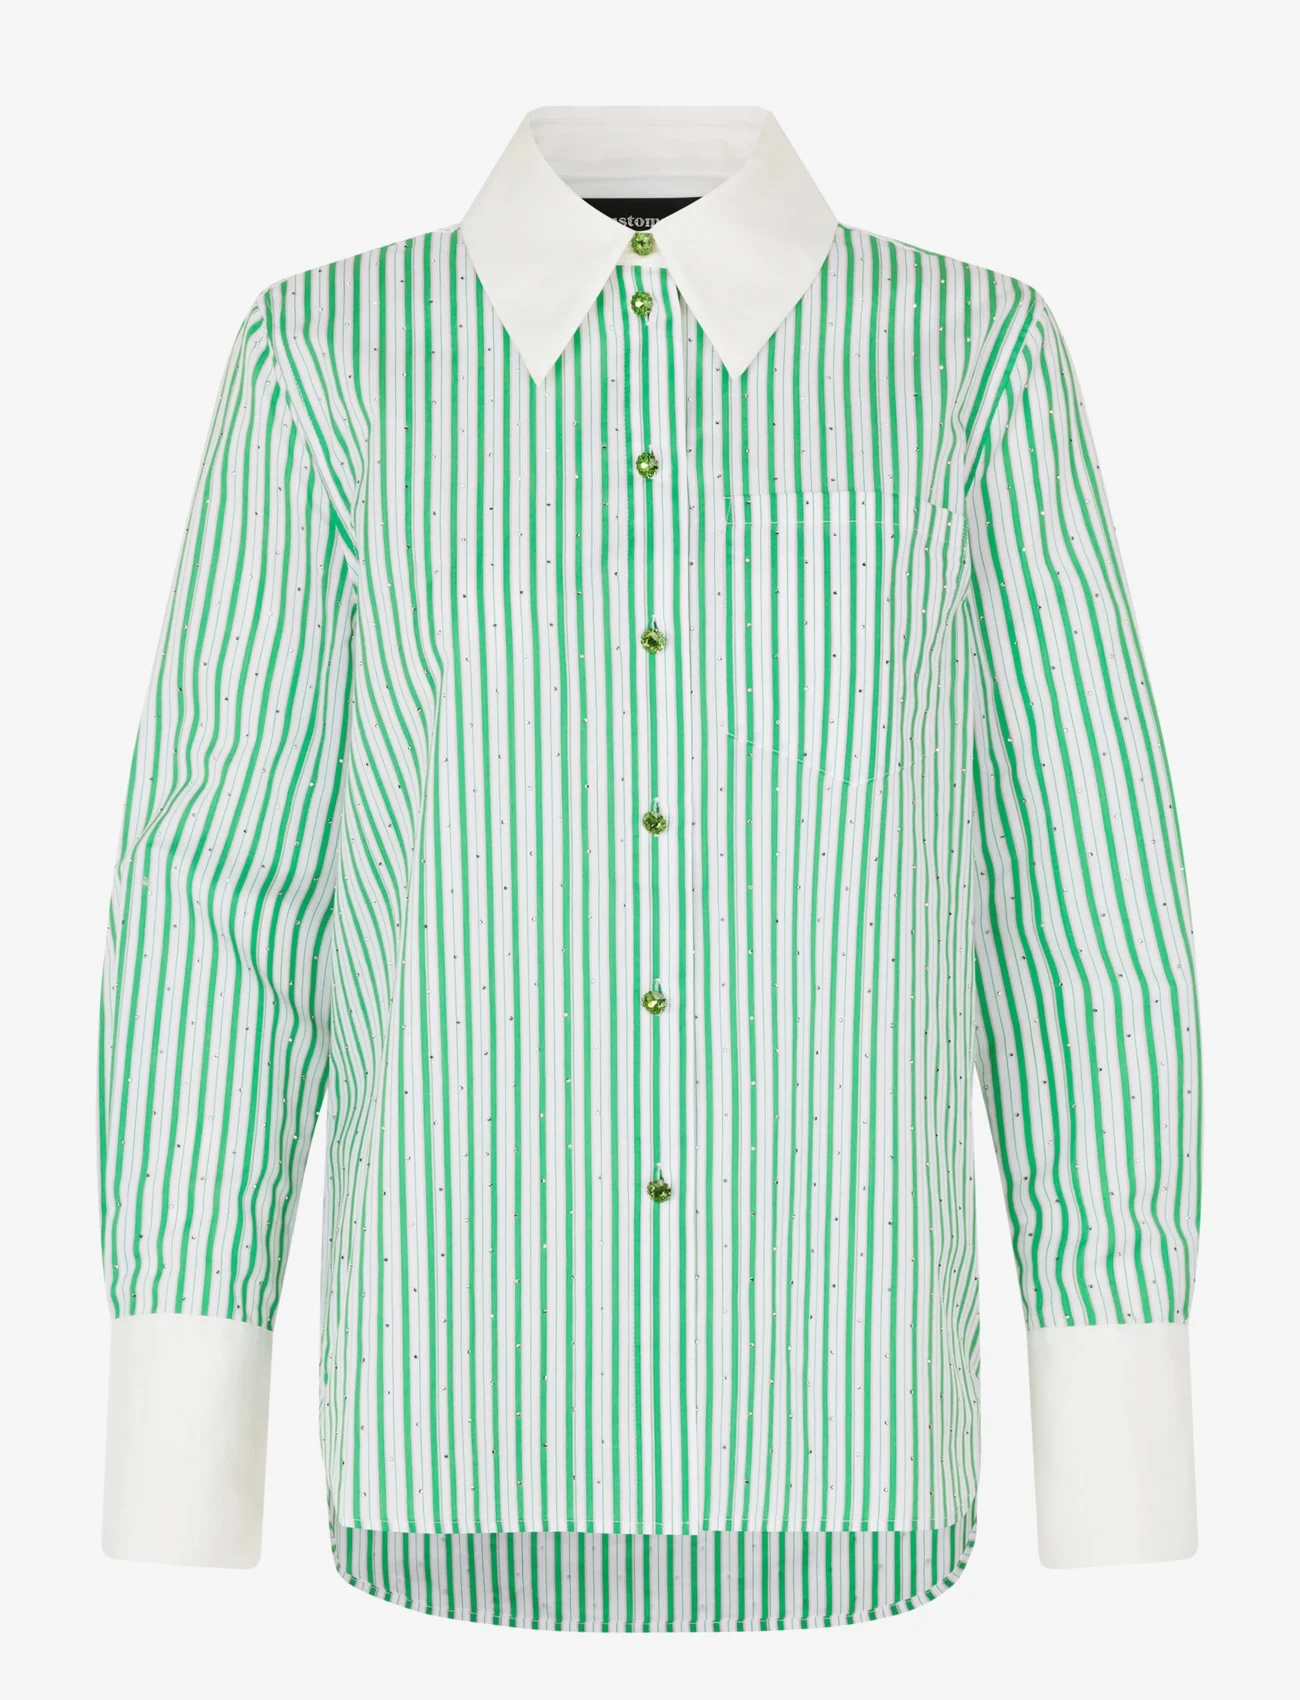 Custommade - Bri By NBS - koszule z długimi rękawami - 001 bright white - 0